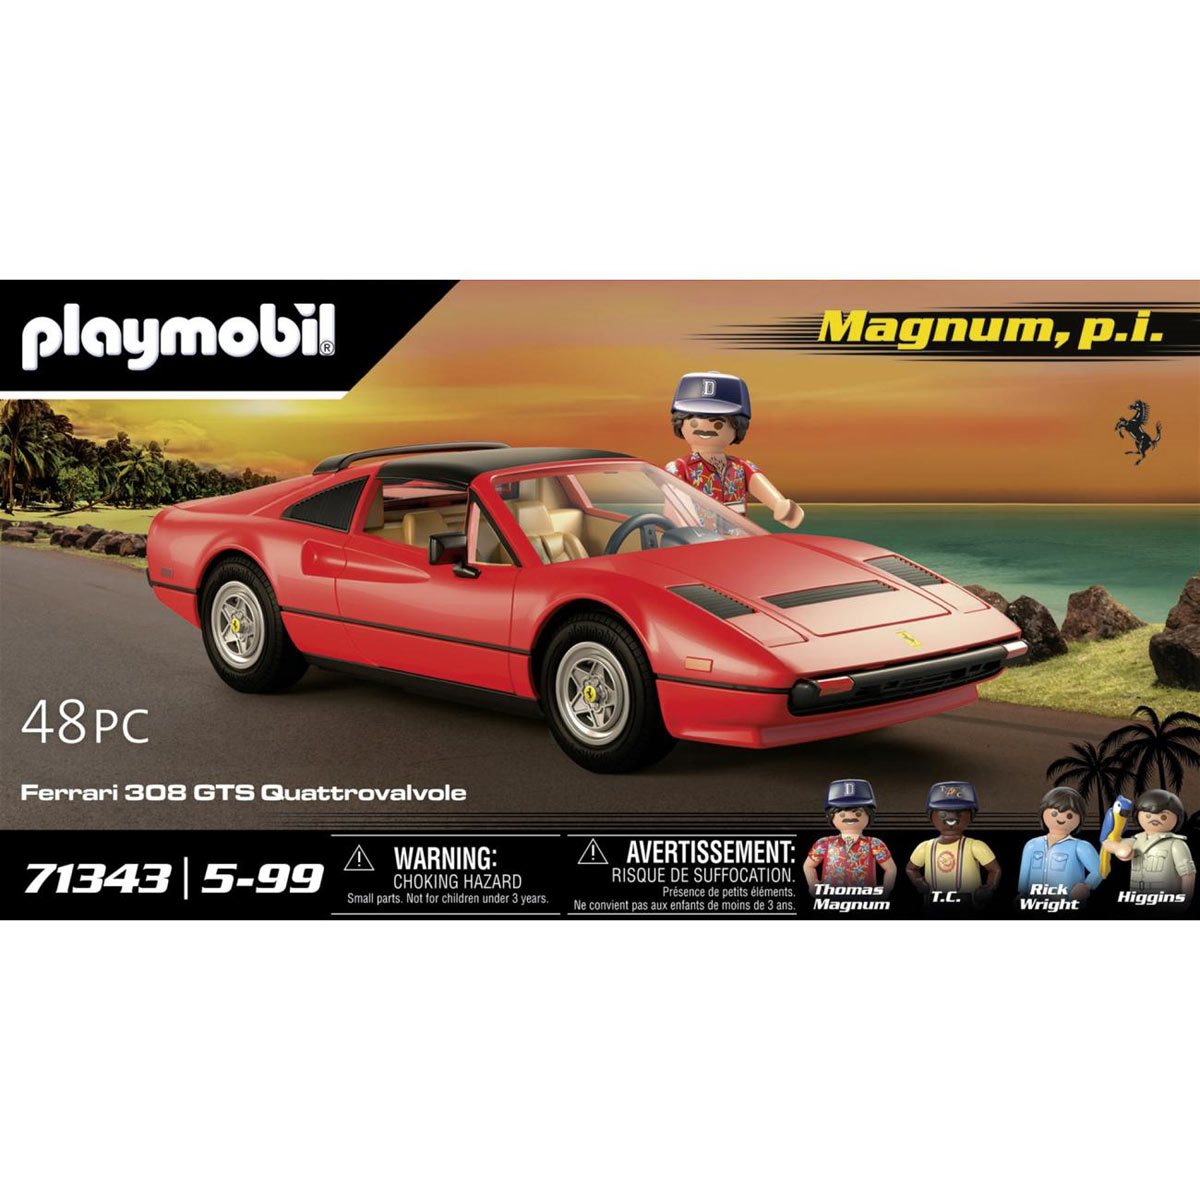 CLASSIC CARS - Magnum Ferrari 308 GTS PLAYMOBIL